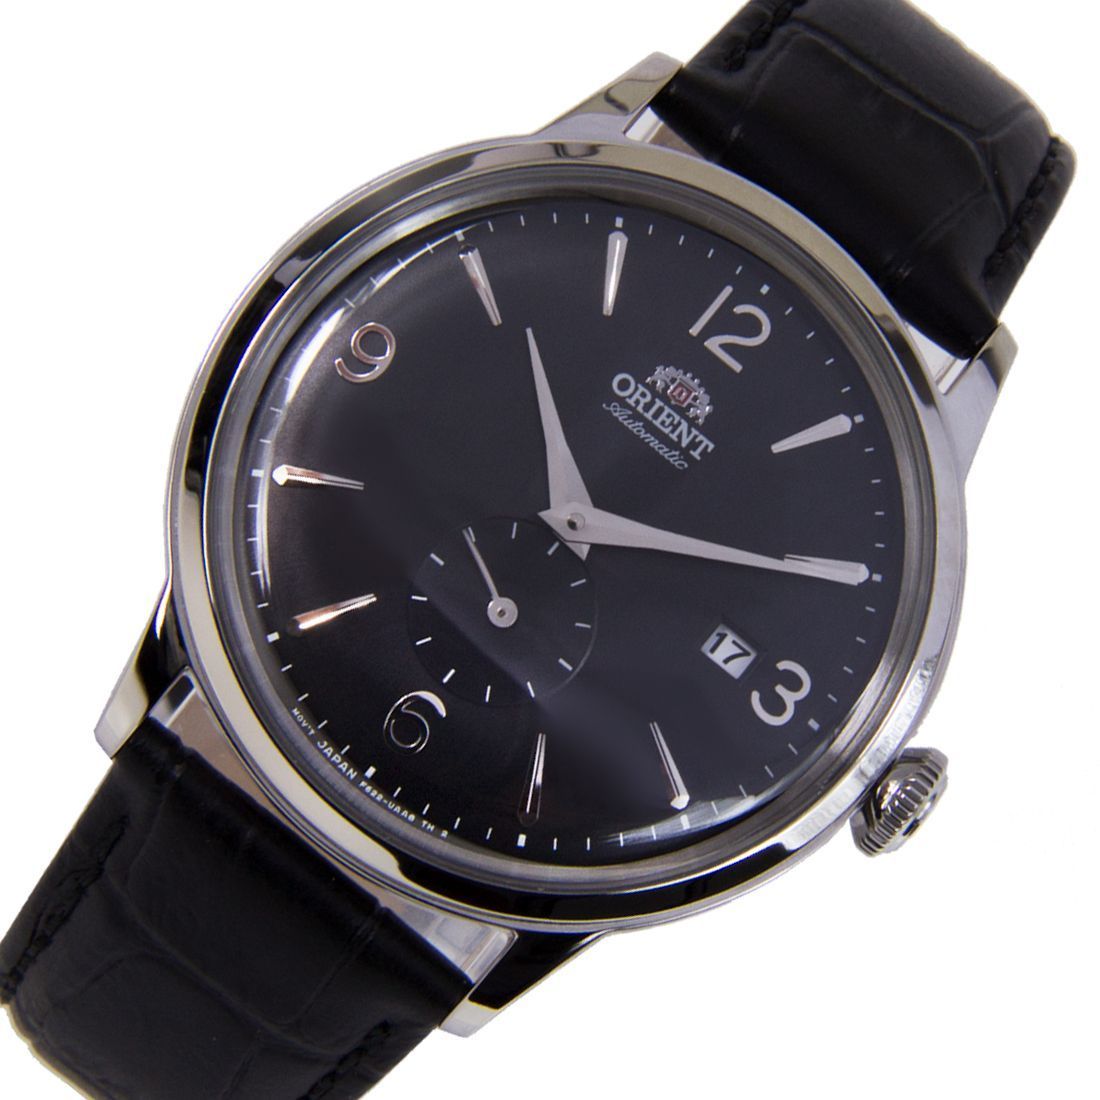 Orient Mechanical Classic Analog RA-AP0005B10B RA-AP0005B Black Leather Watch -Orient